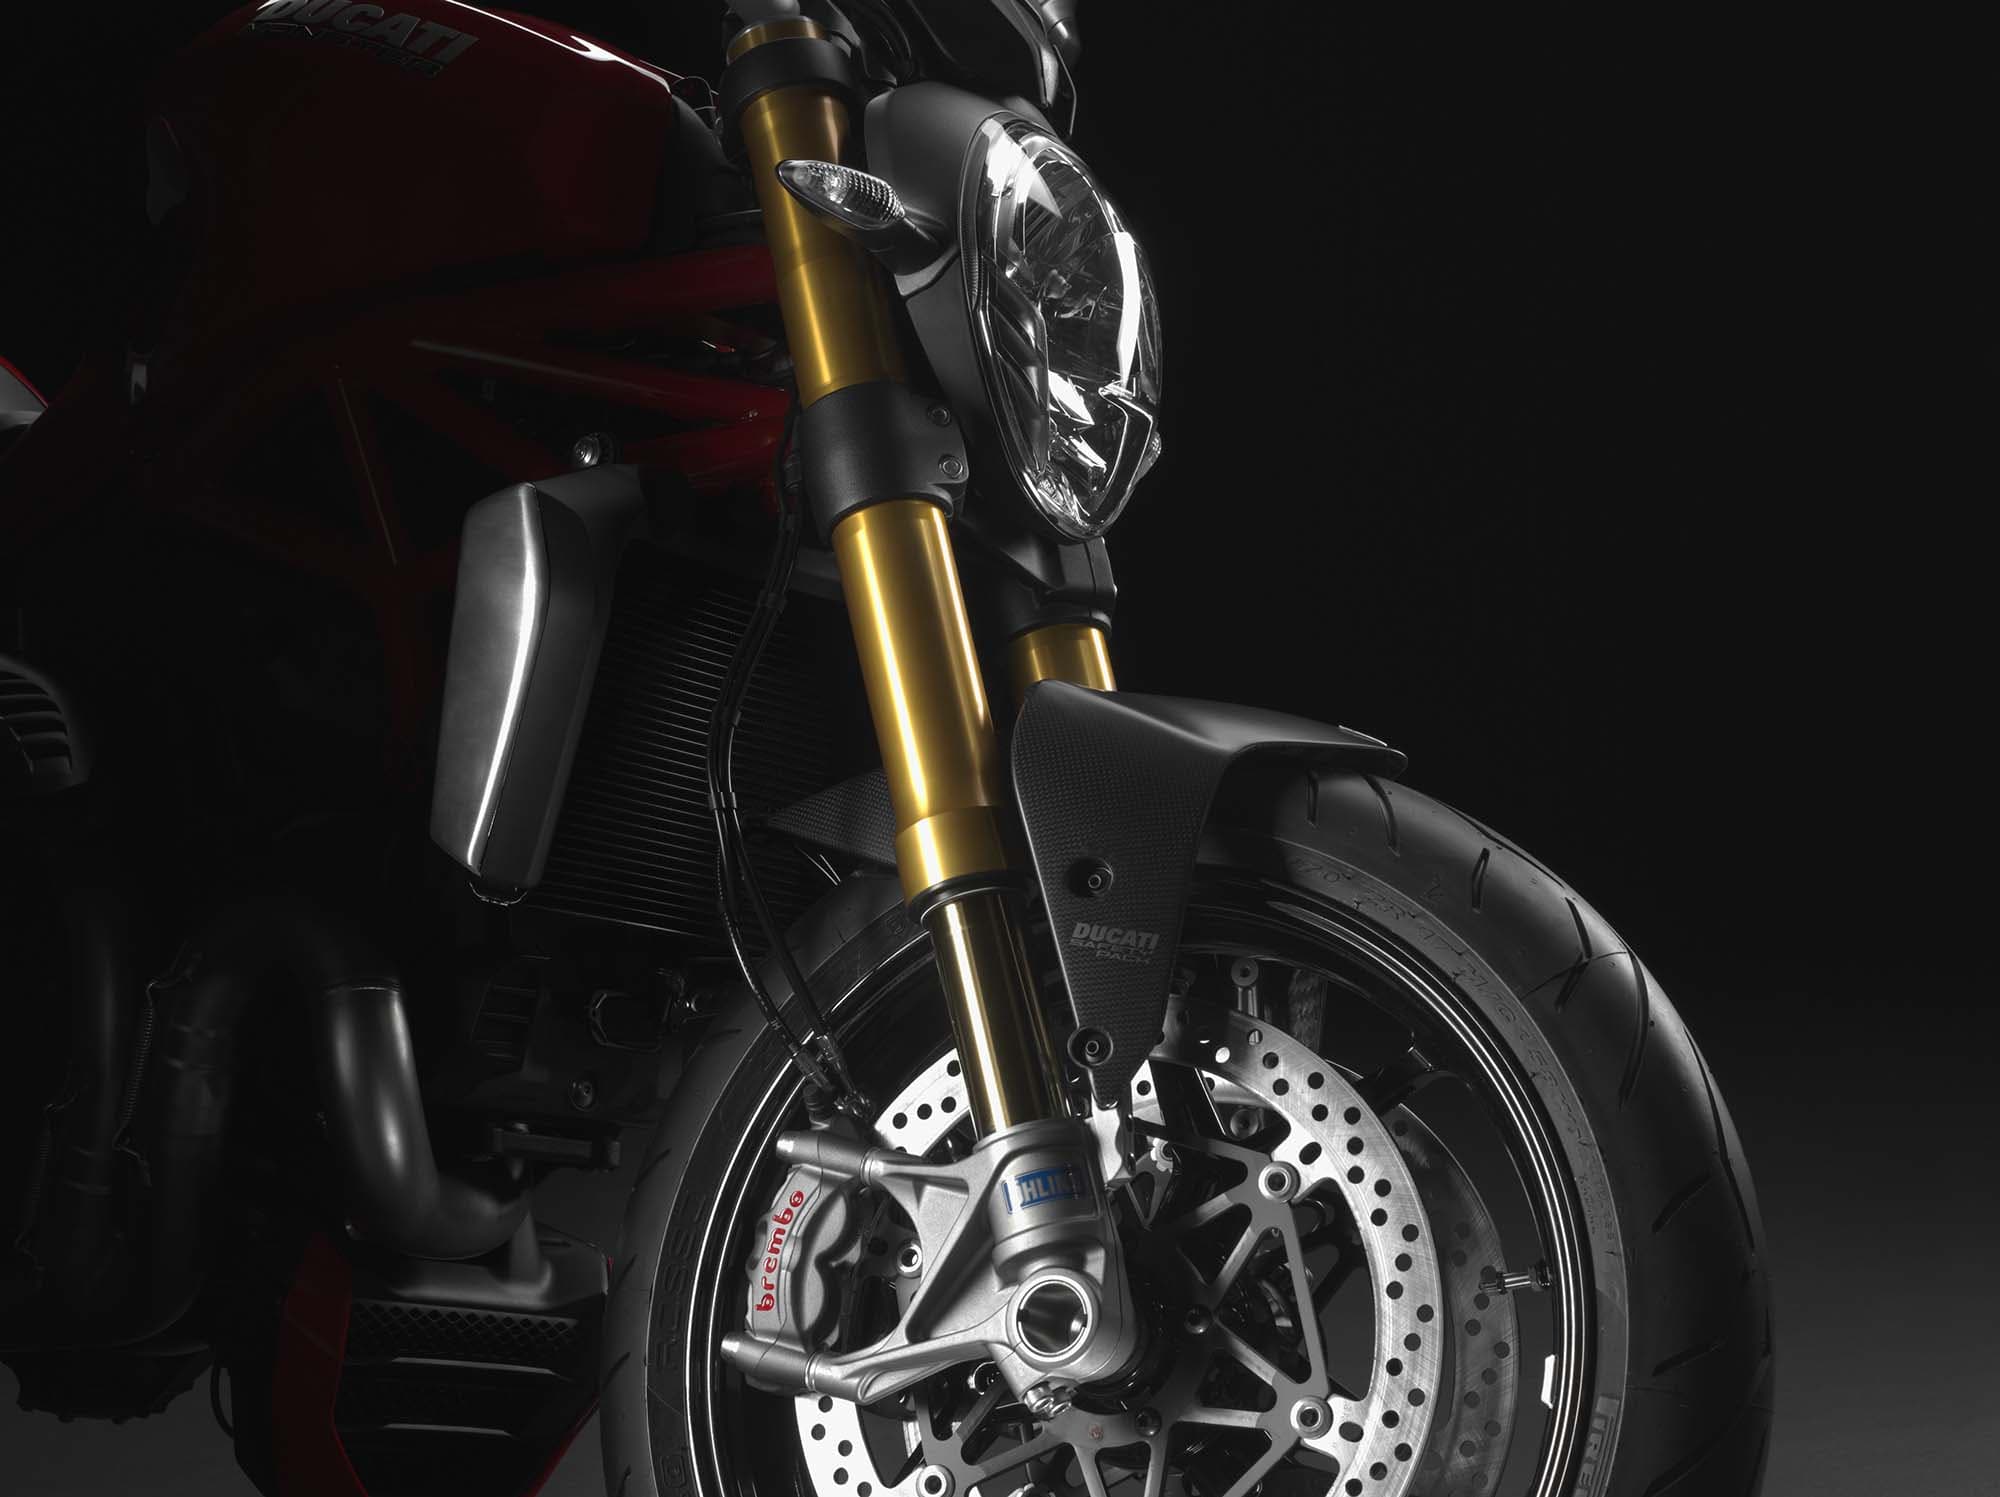 2014-2016 Ducati Monster 1200 S studio Ohlins suspension and Brembo brakes